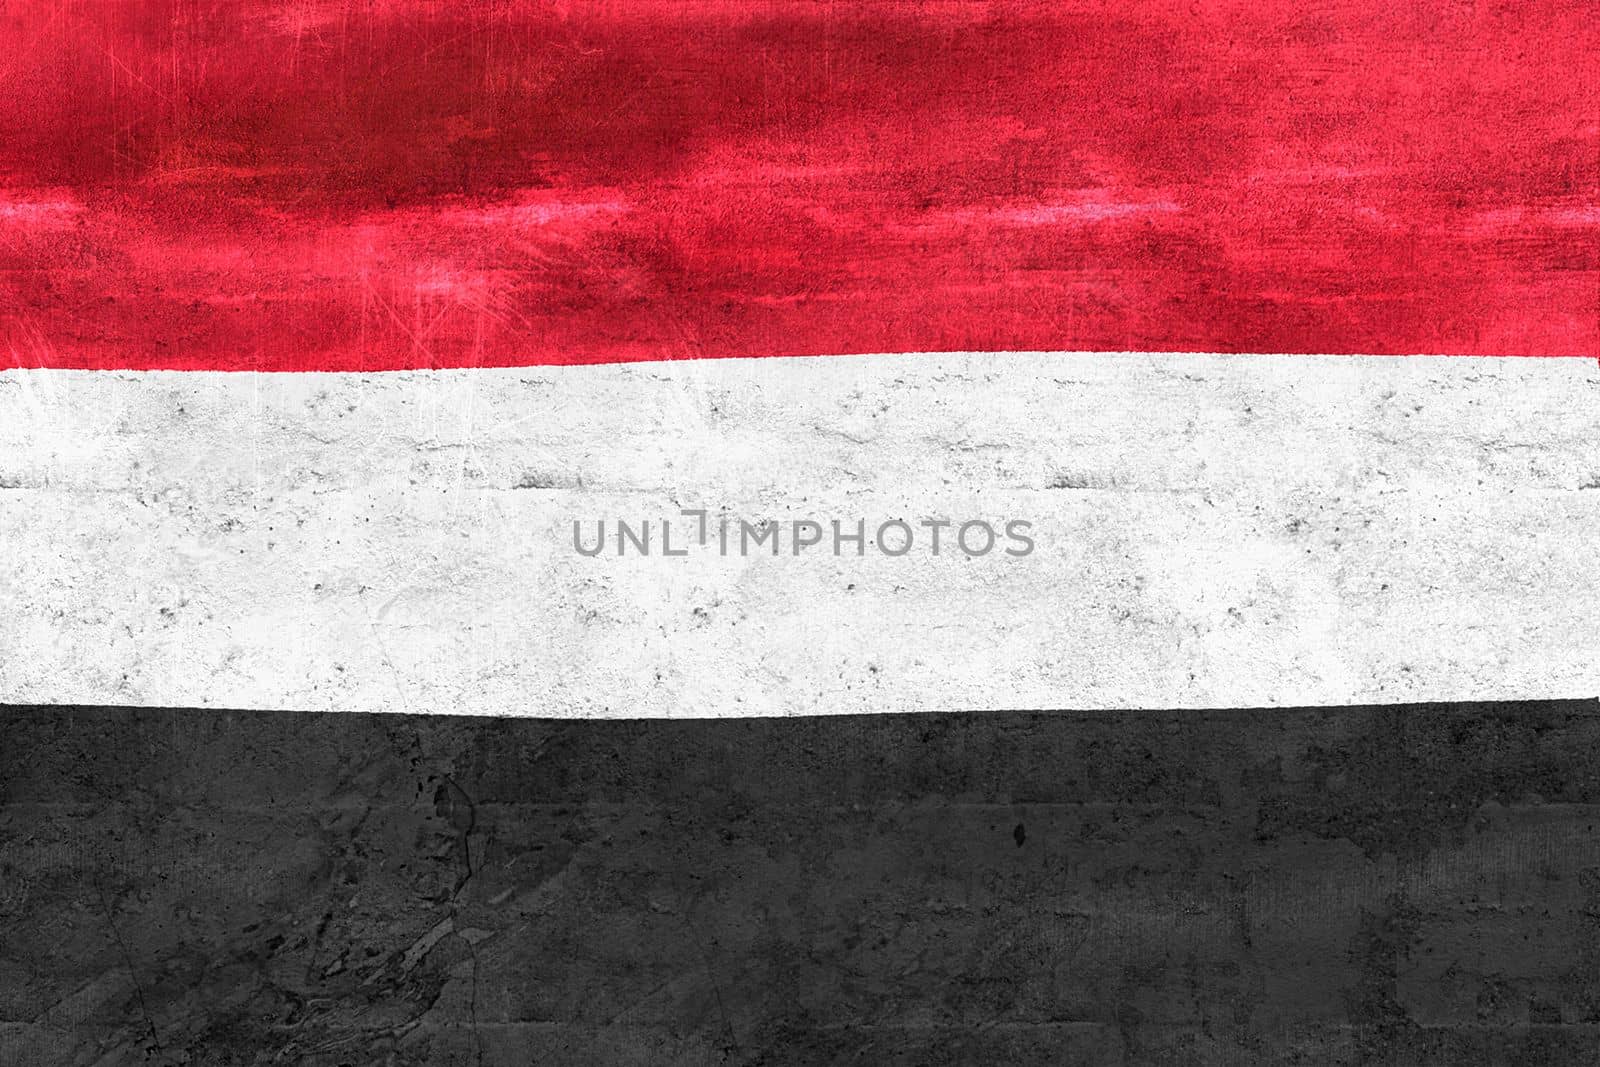 3D-Illustration of a Yemen flag - realistic waving fabric flag.